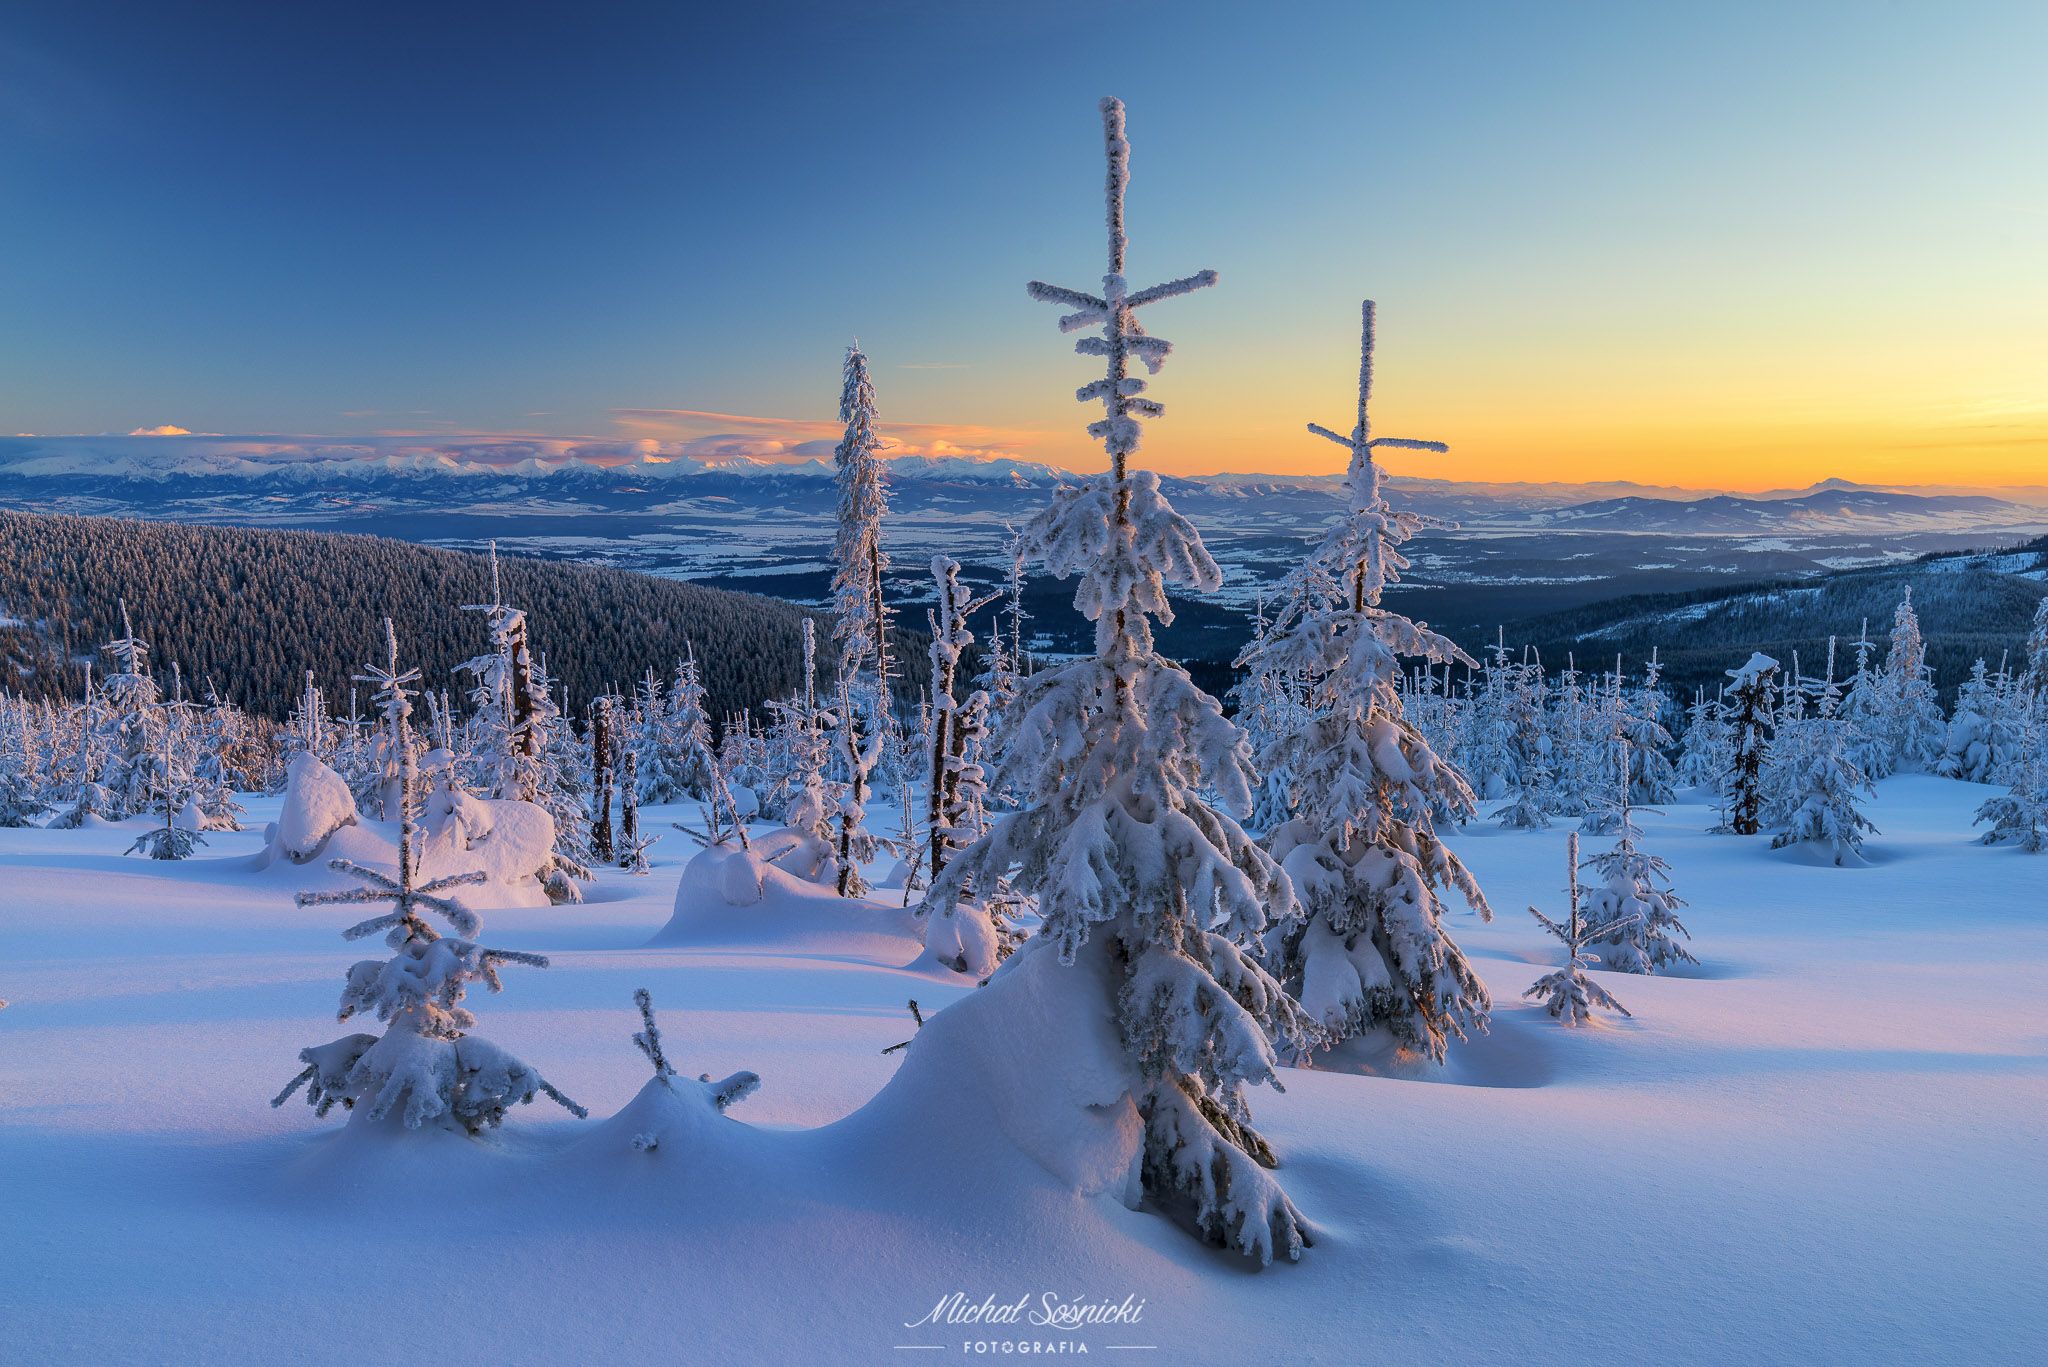 #tree #winter #sunset #sky #wood #nature #amazing #earth #pics #photo #best #poland #pentax #benro #haida, Michał Sośnicki